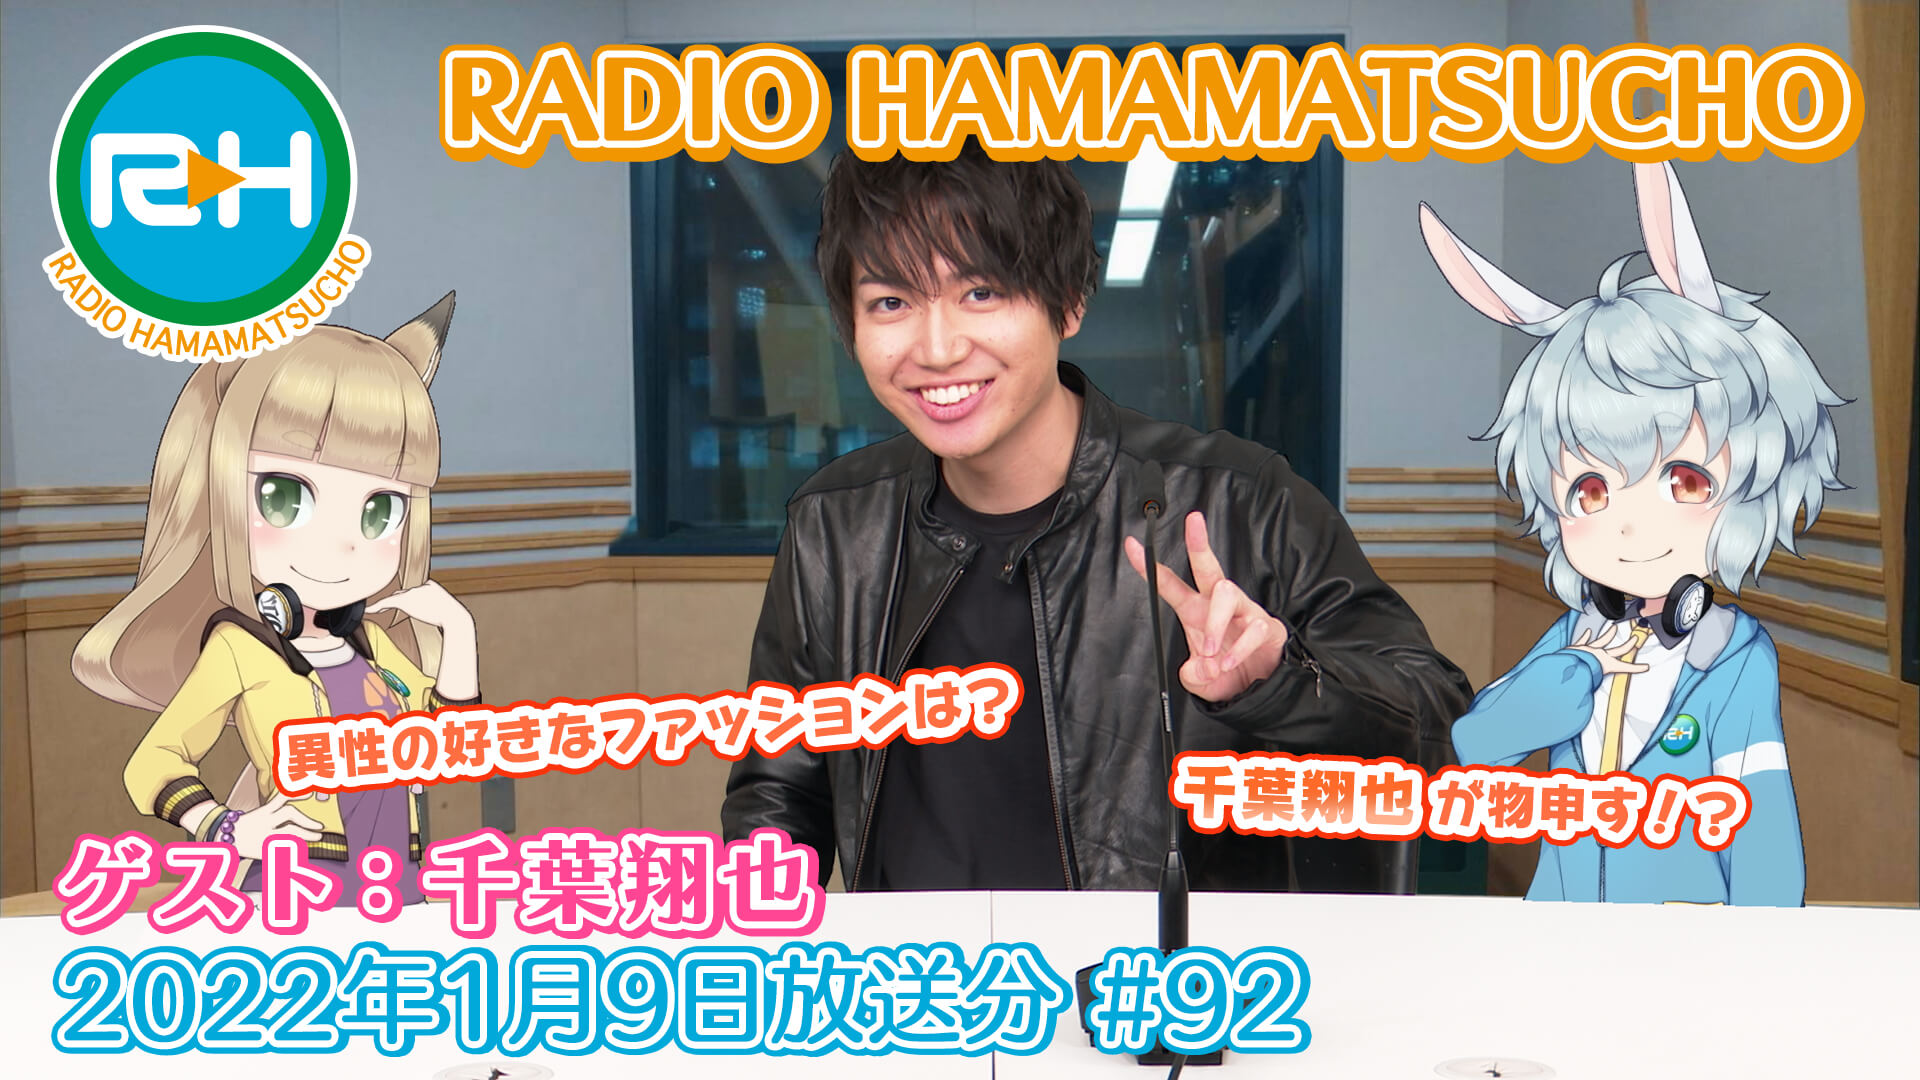 RADIO HAMAMATSUCHO 第92回 (2022年1月9日放送分) ゲスト: 千葉翔也